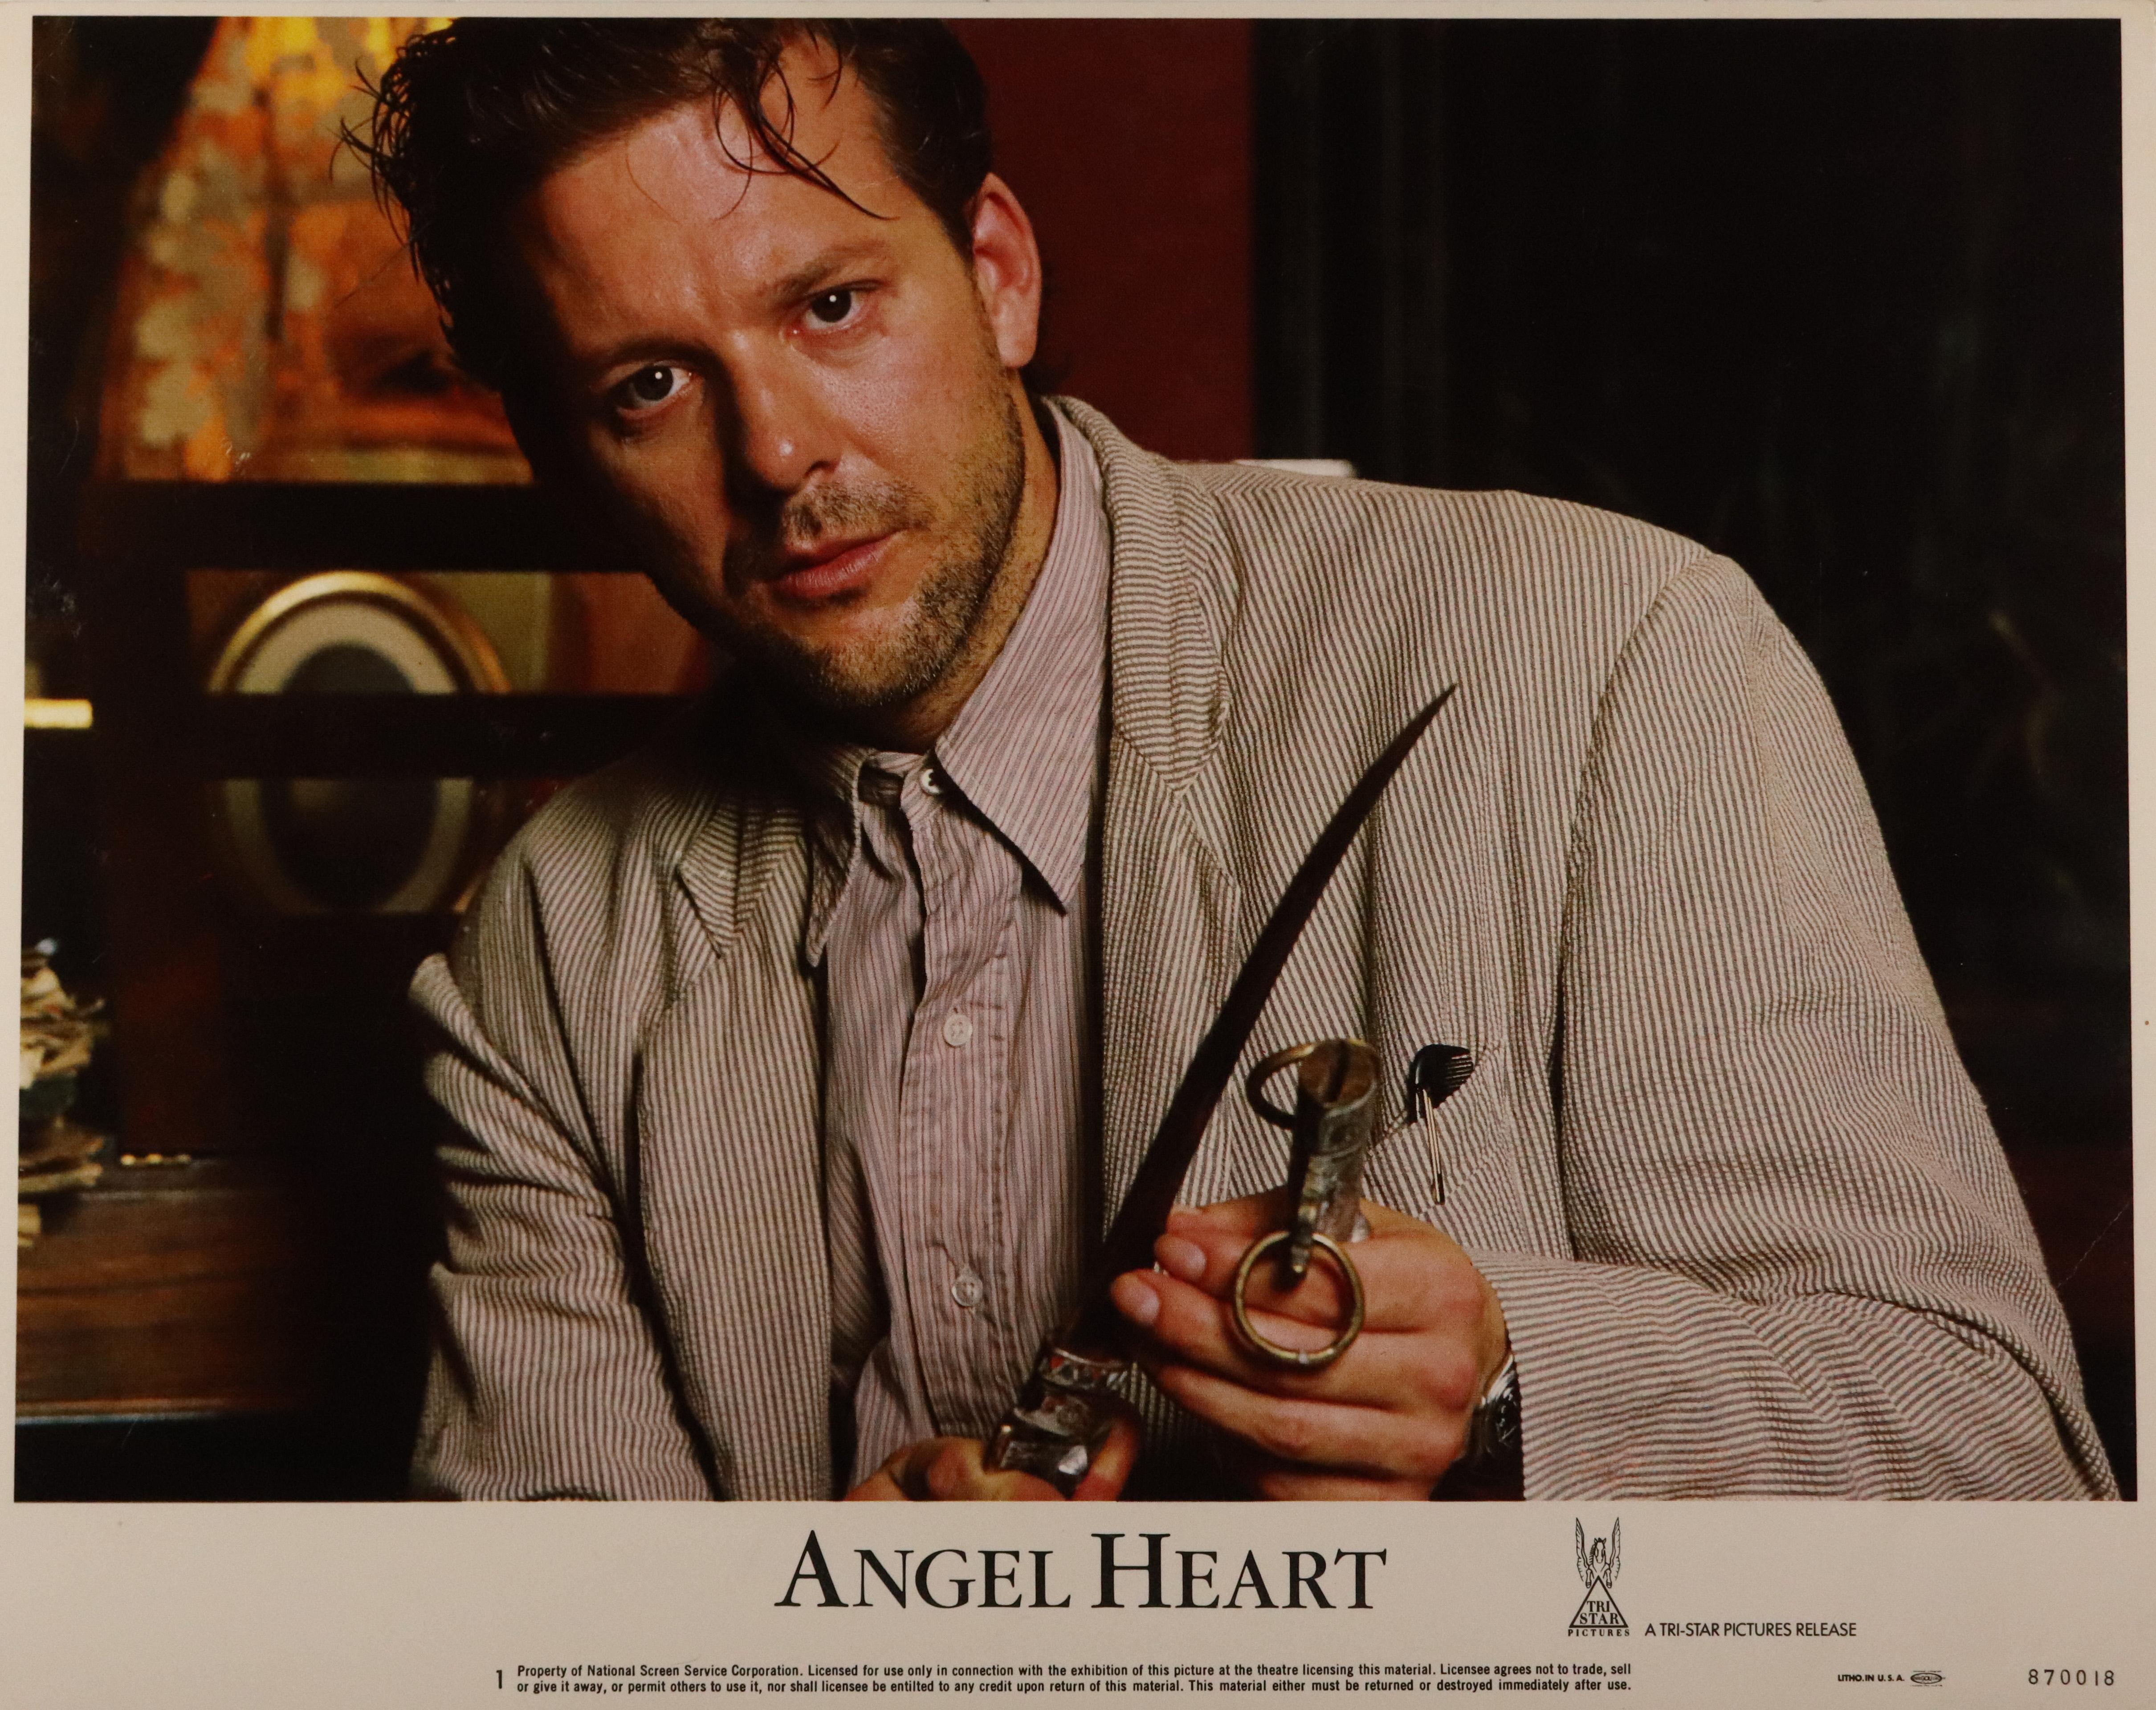 Unknown Interior Print - "Angel Heart" Lobby Card, USA 1987